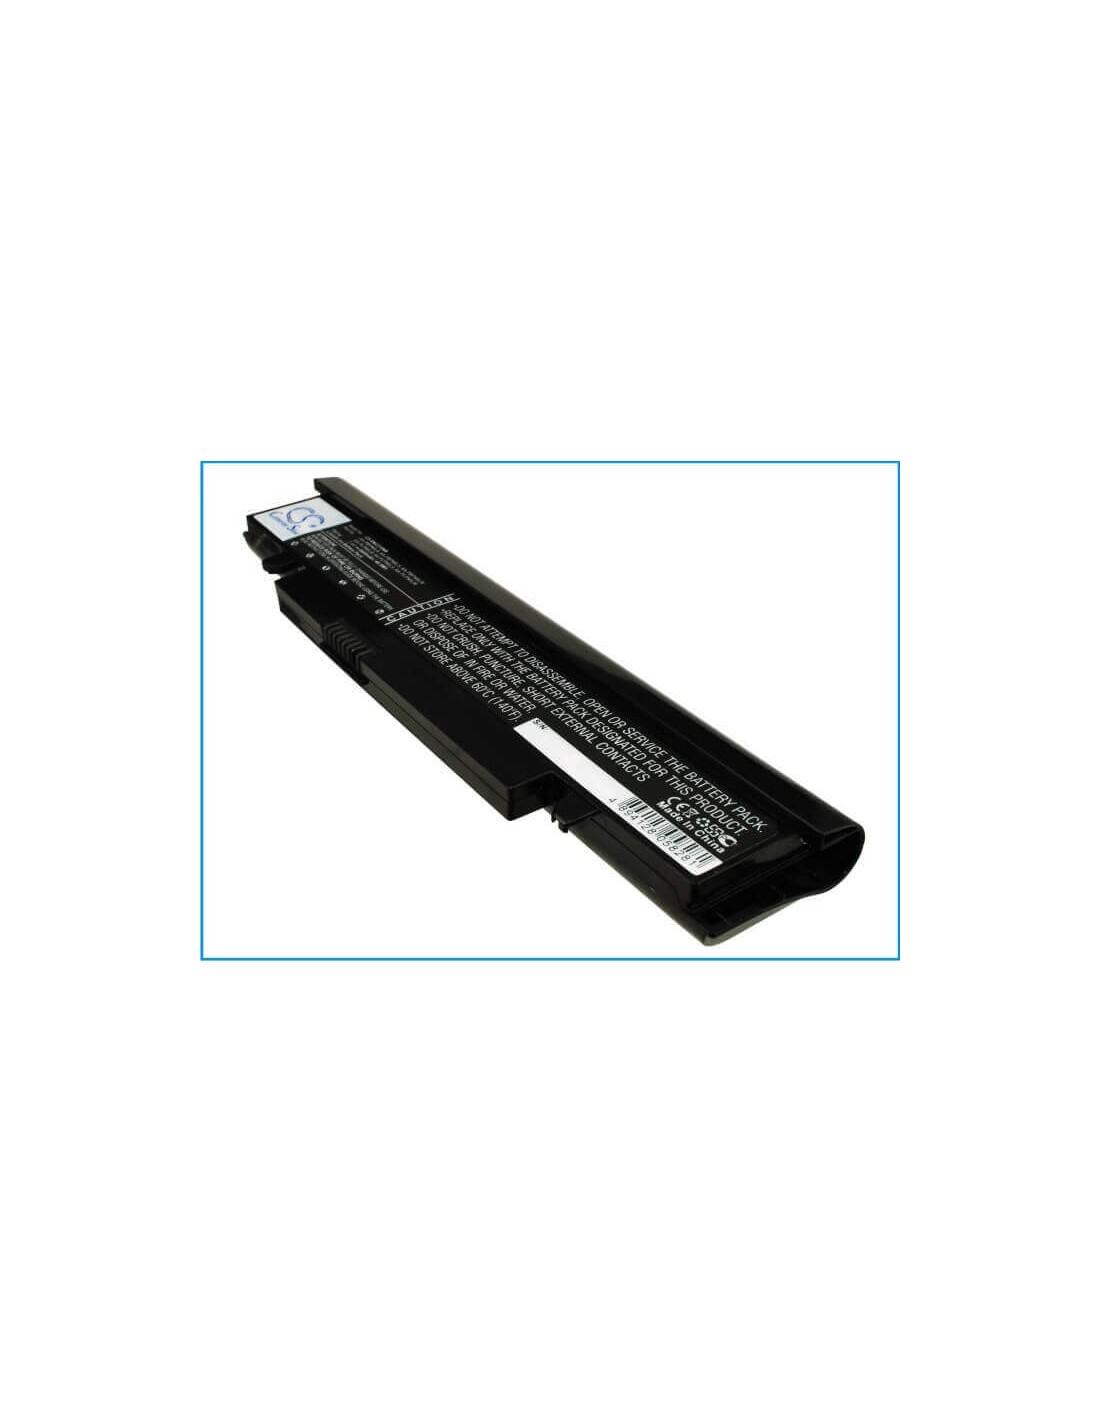 Black Battery for Samsung Np-nc110, Np-nc210, Nc110 7.4V, 6600mAh - 48.84Wh